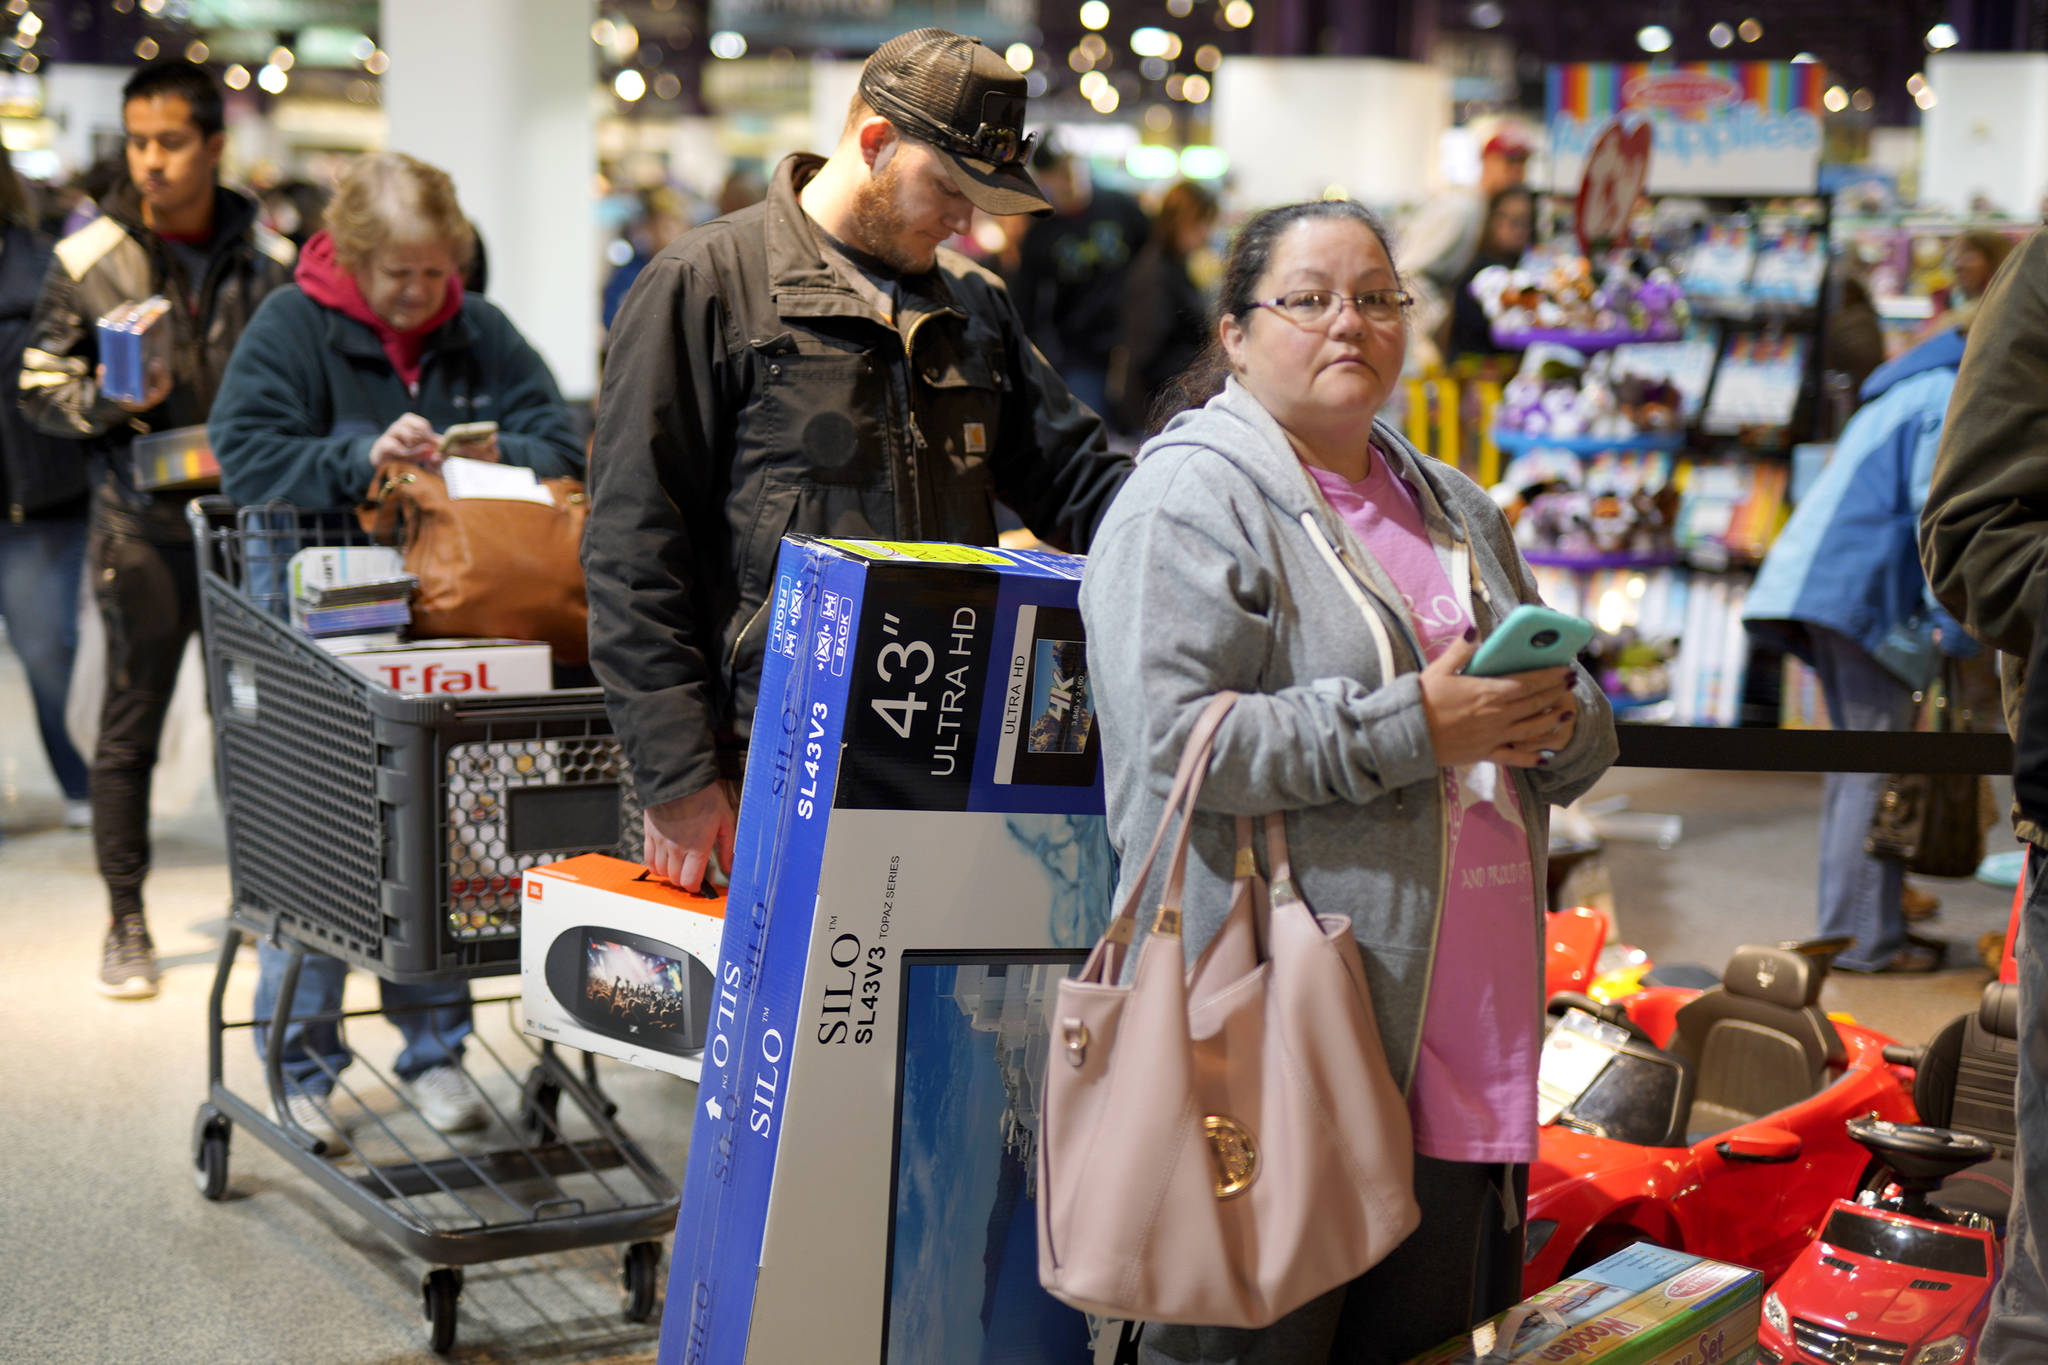 Black Friday shoppers wait in line to check out at the Nebraska Furniture Mart store in Omaha, Nebraska on Friday, Nov. 23, 2018. (Nati Harnik | Associated Press)